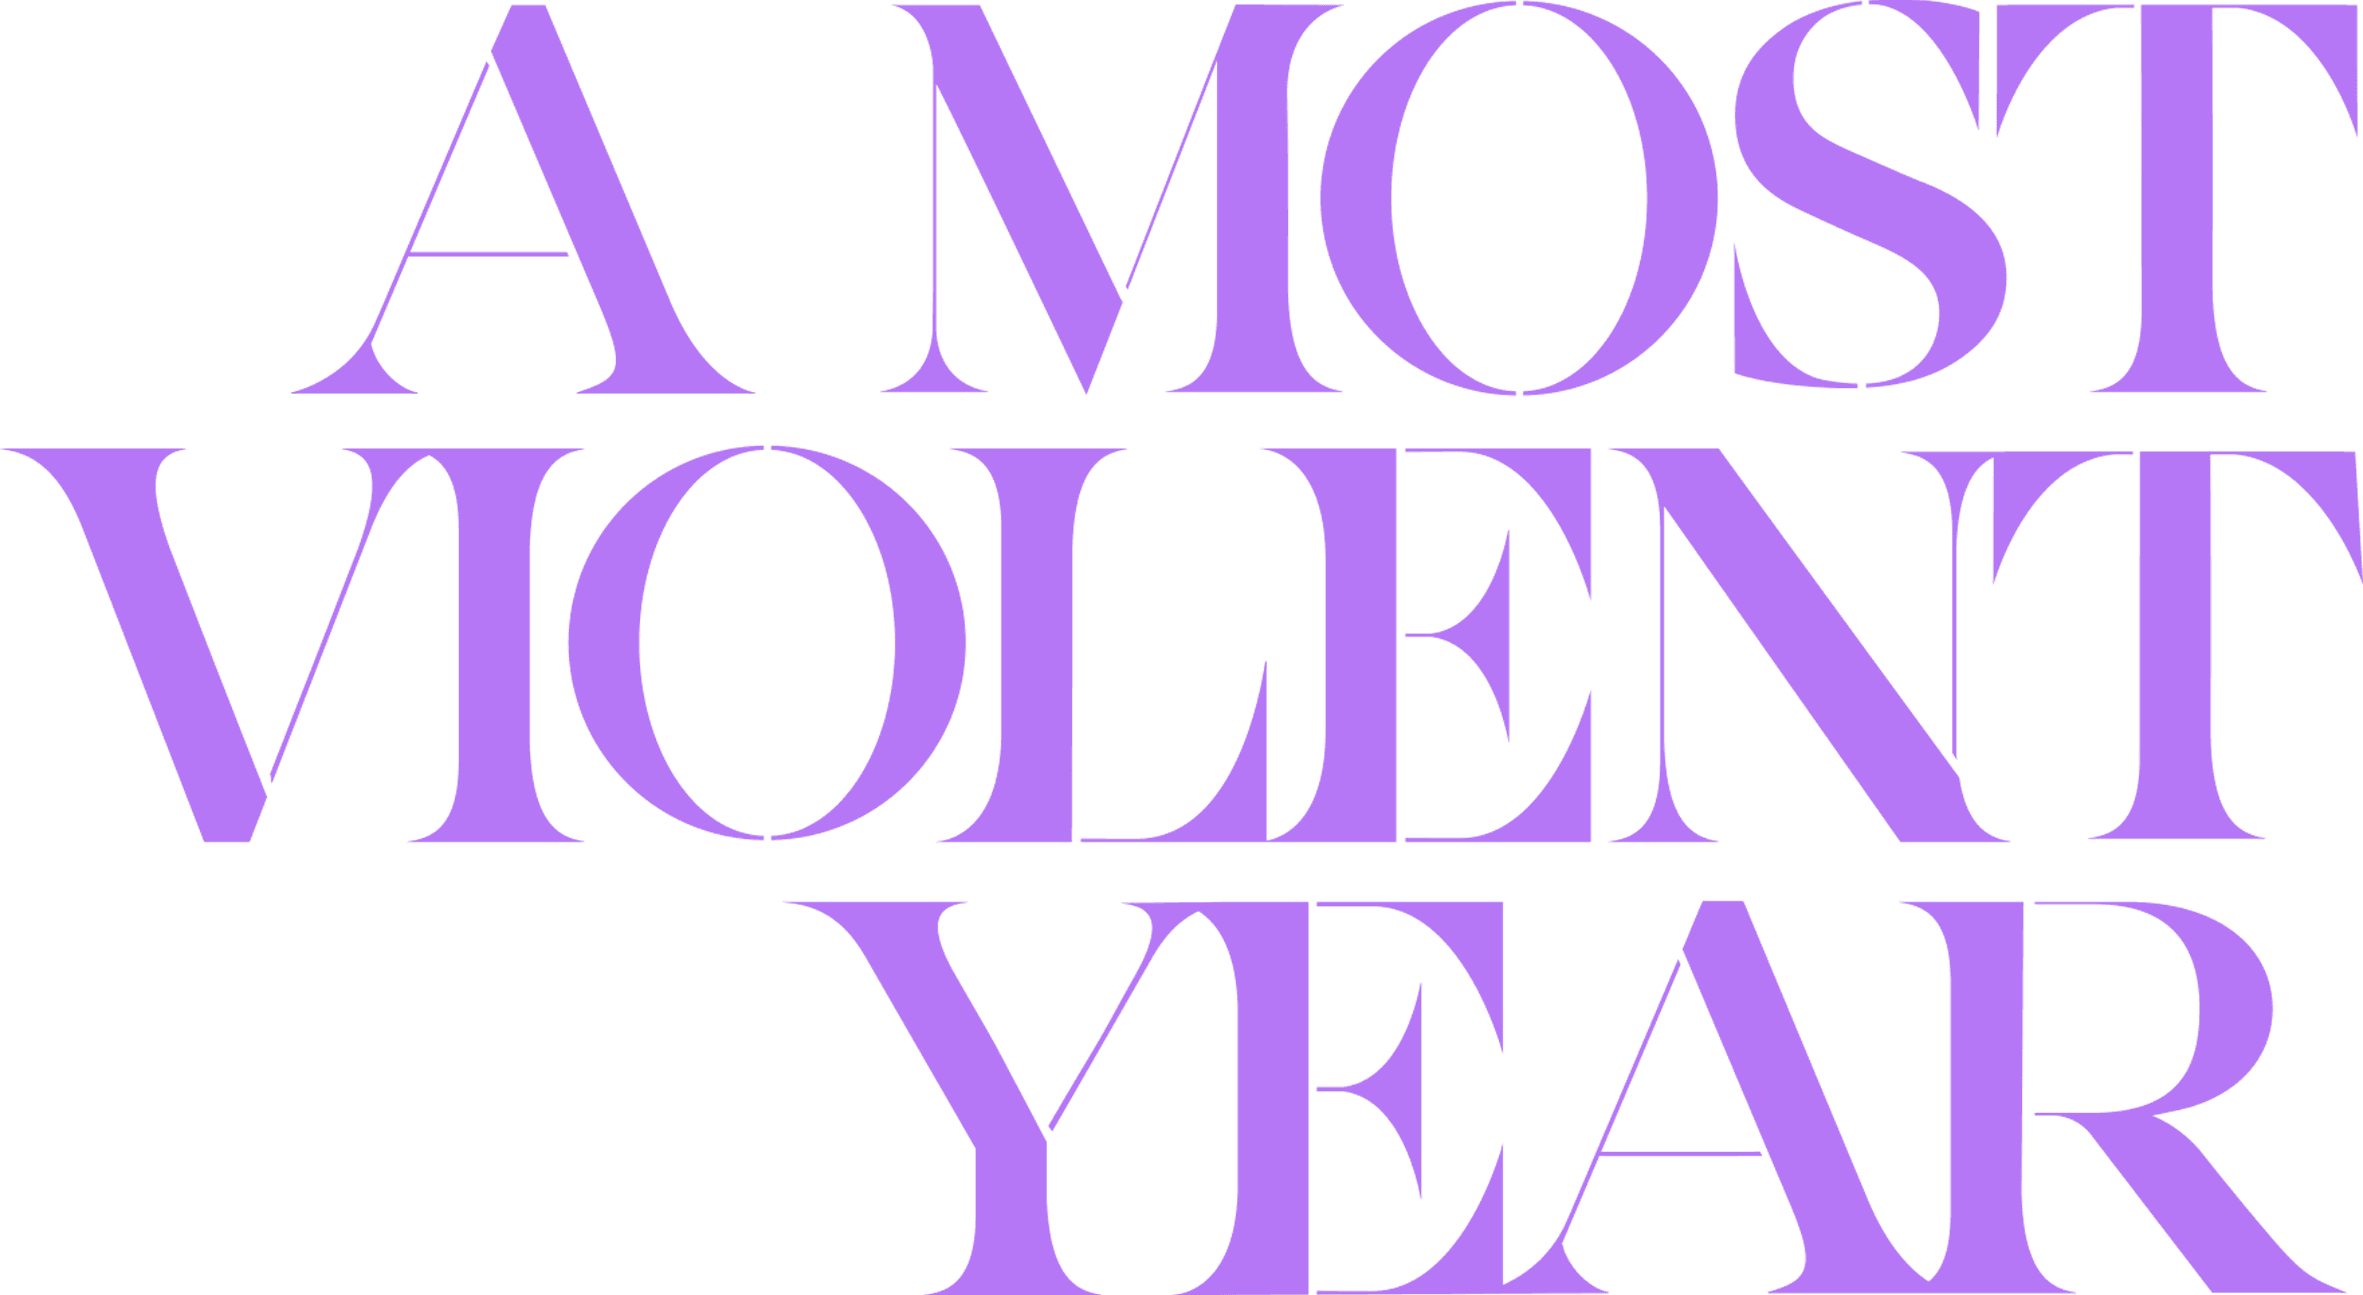 A Most Violent Year logo